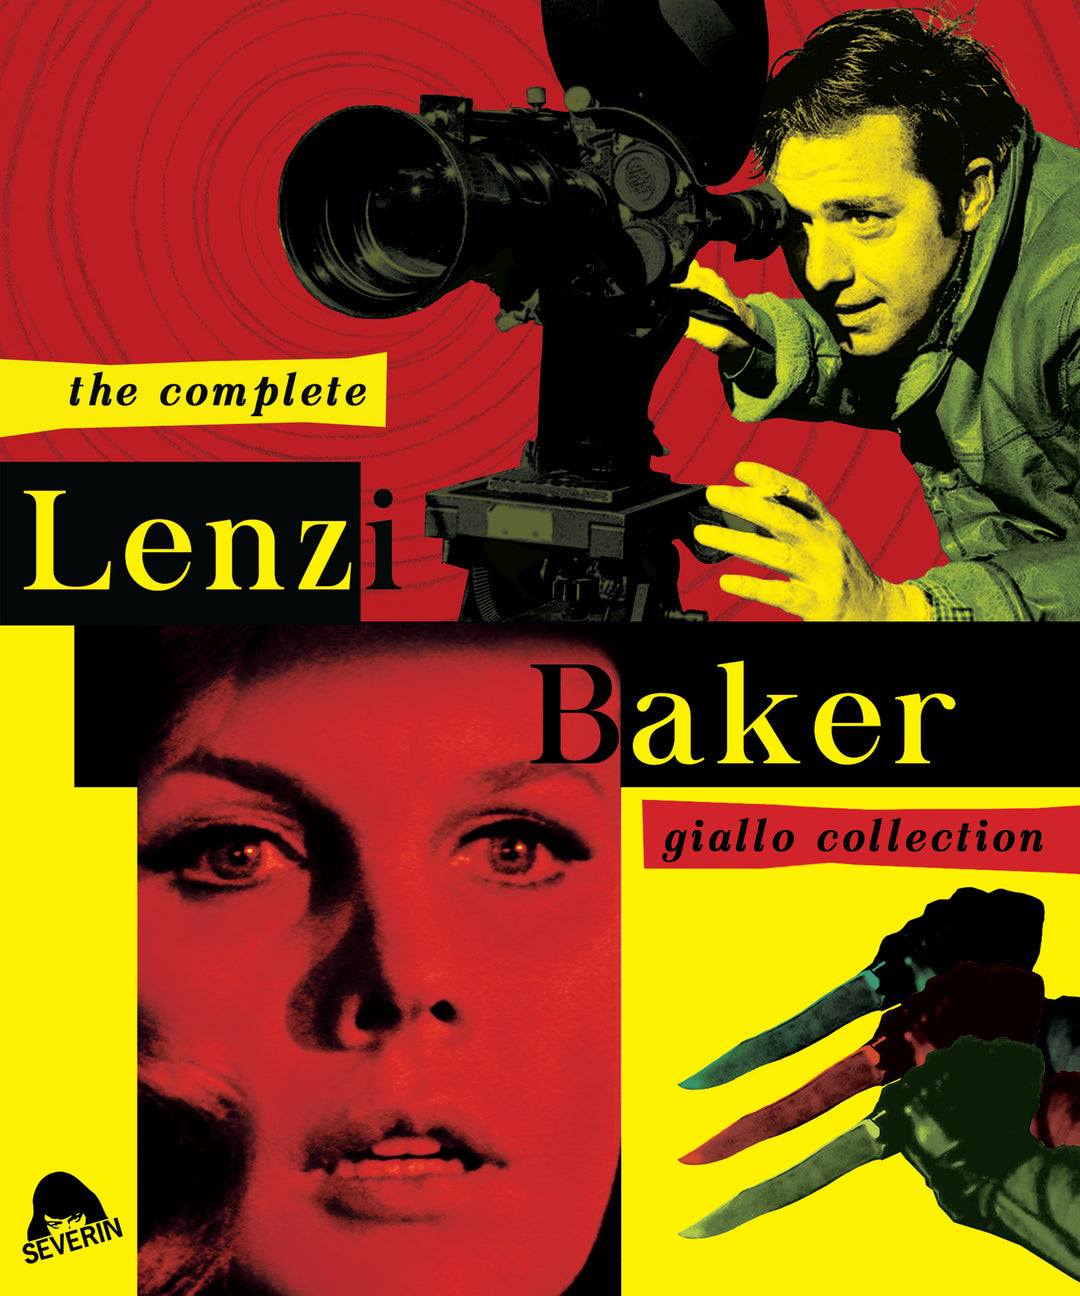 The Complete Lenzi/Baker Giallo Collection